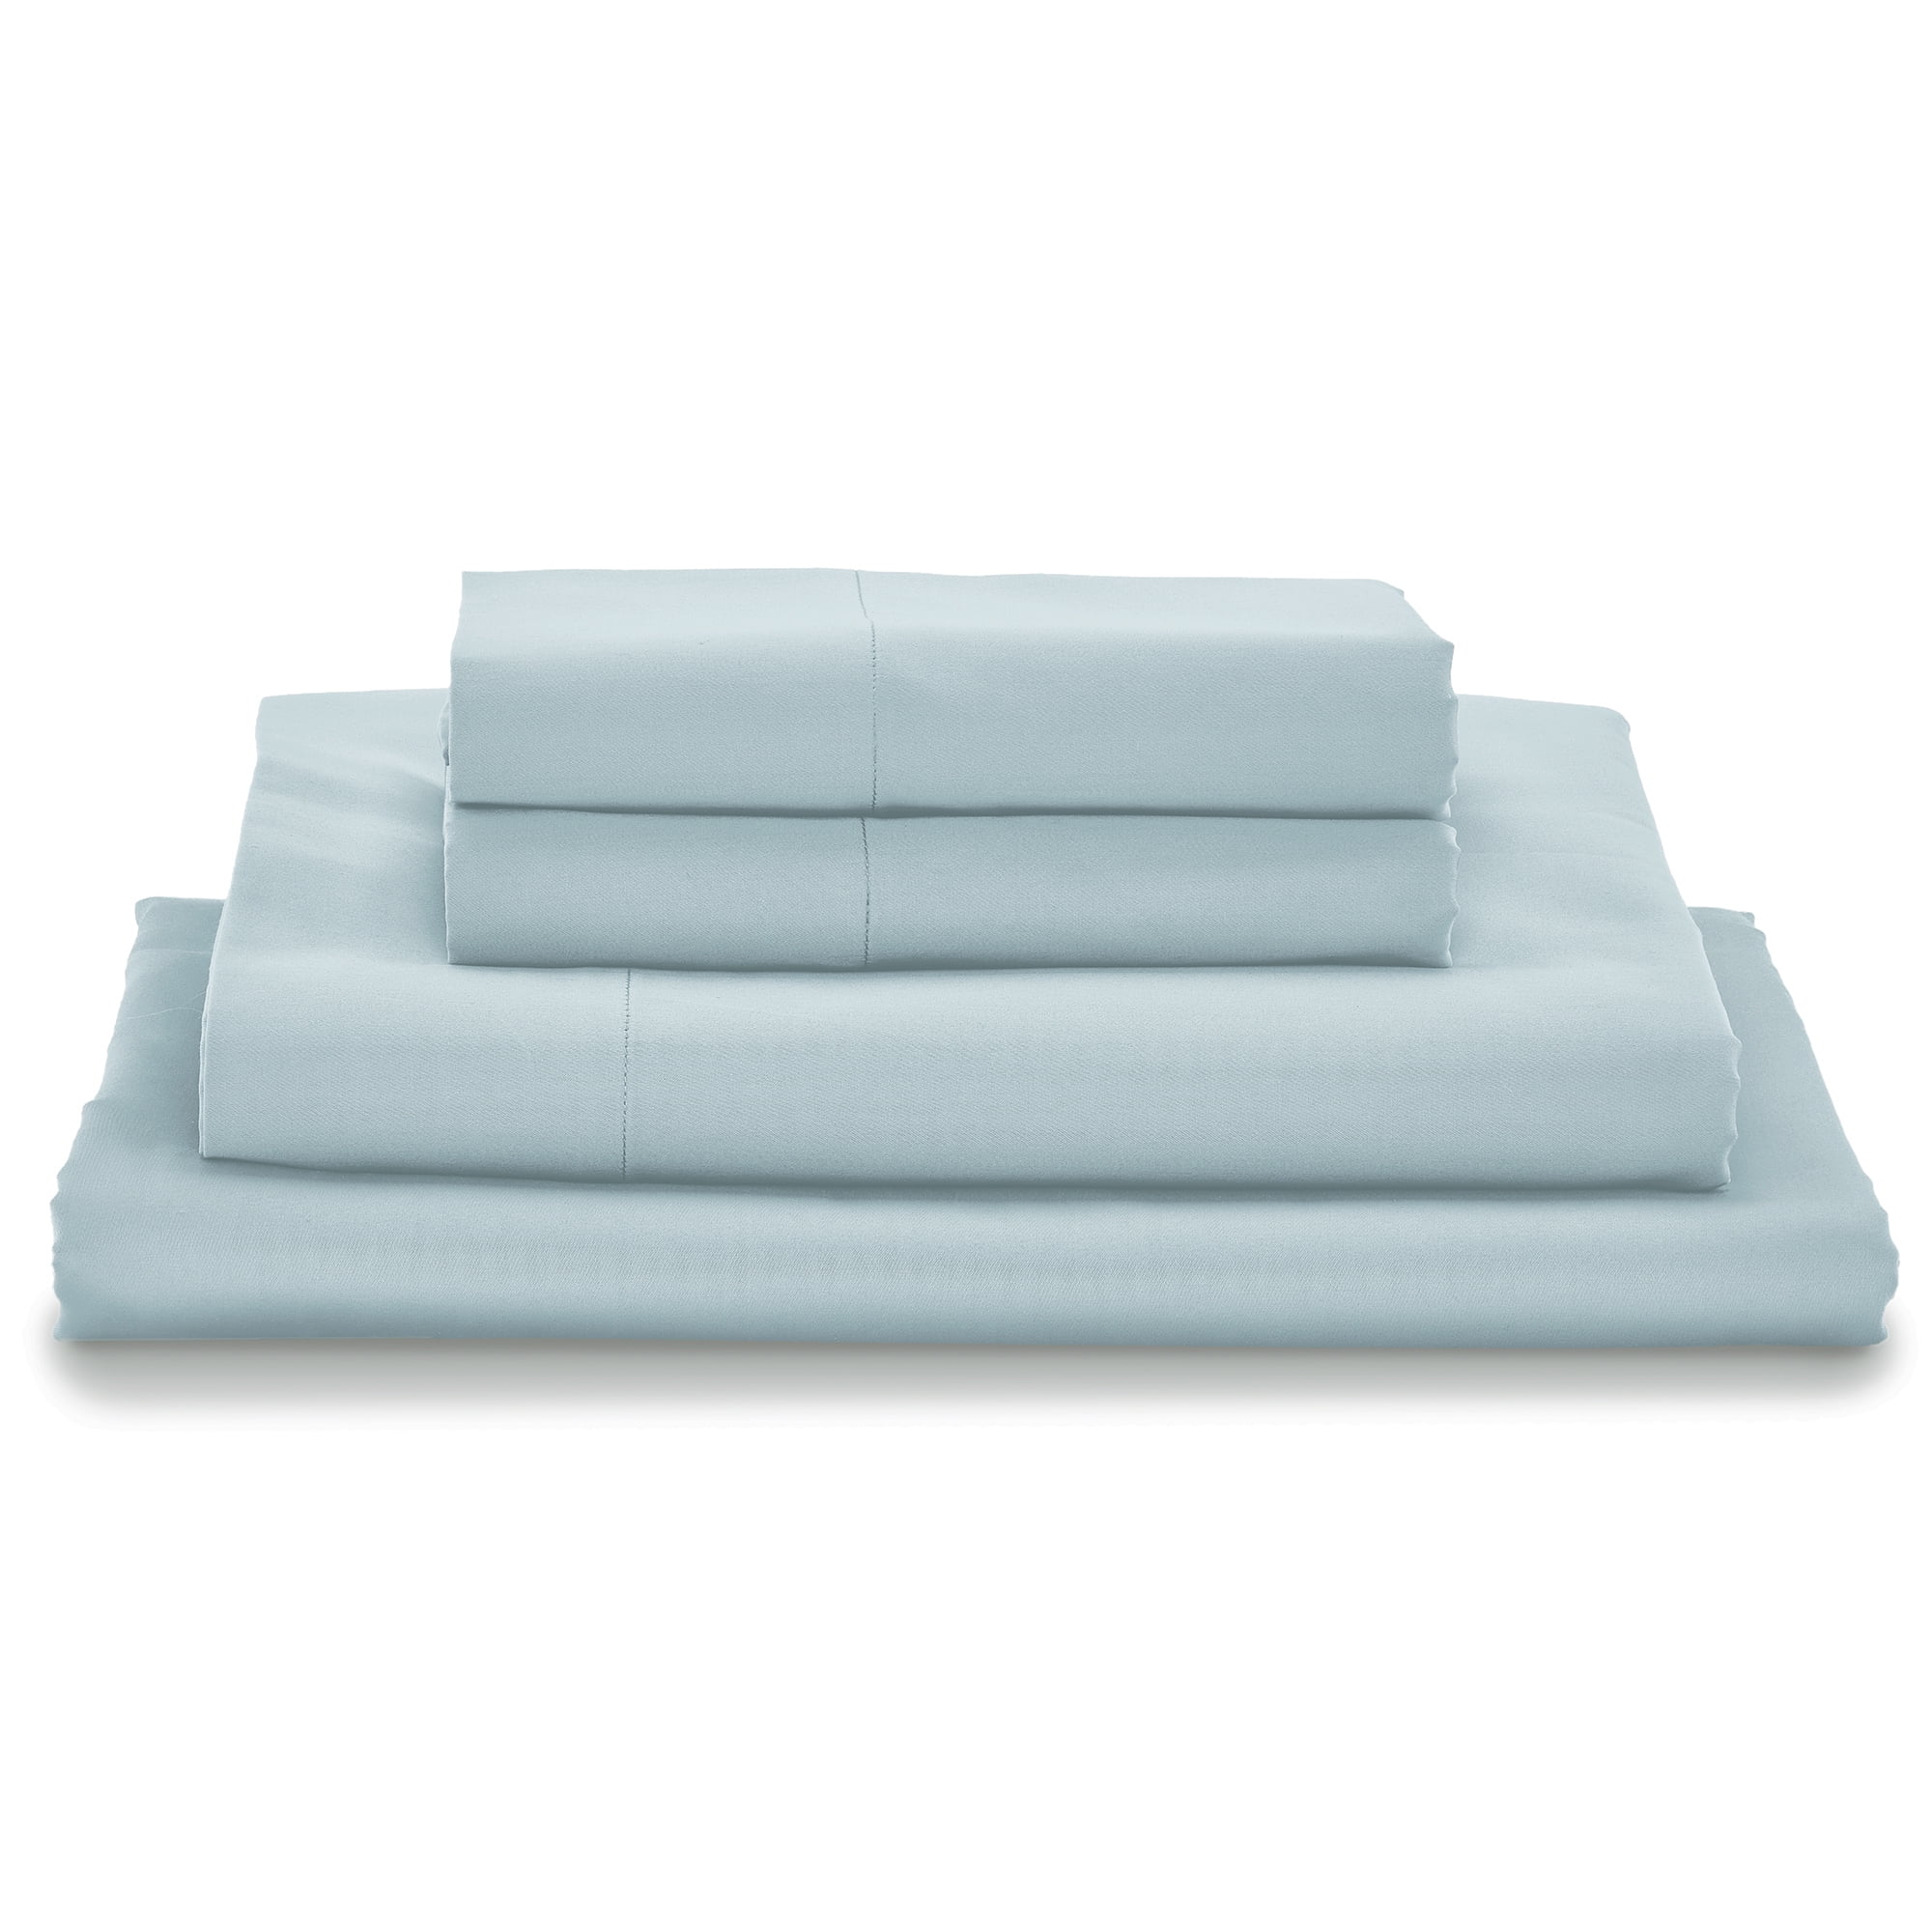 Twin XL, Blush MyPillow Giza Dreams Bed Sheets